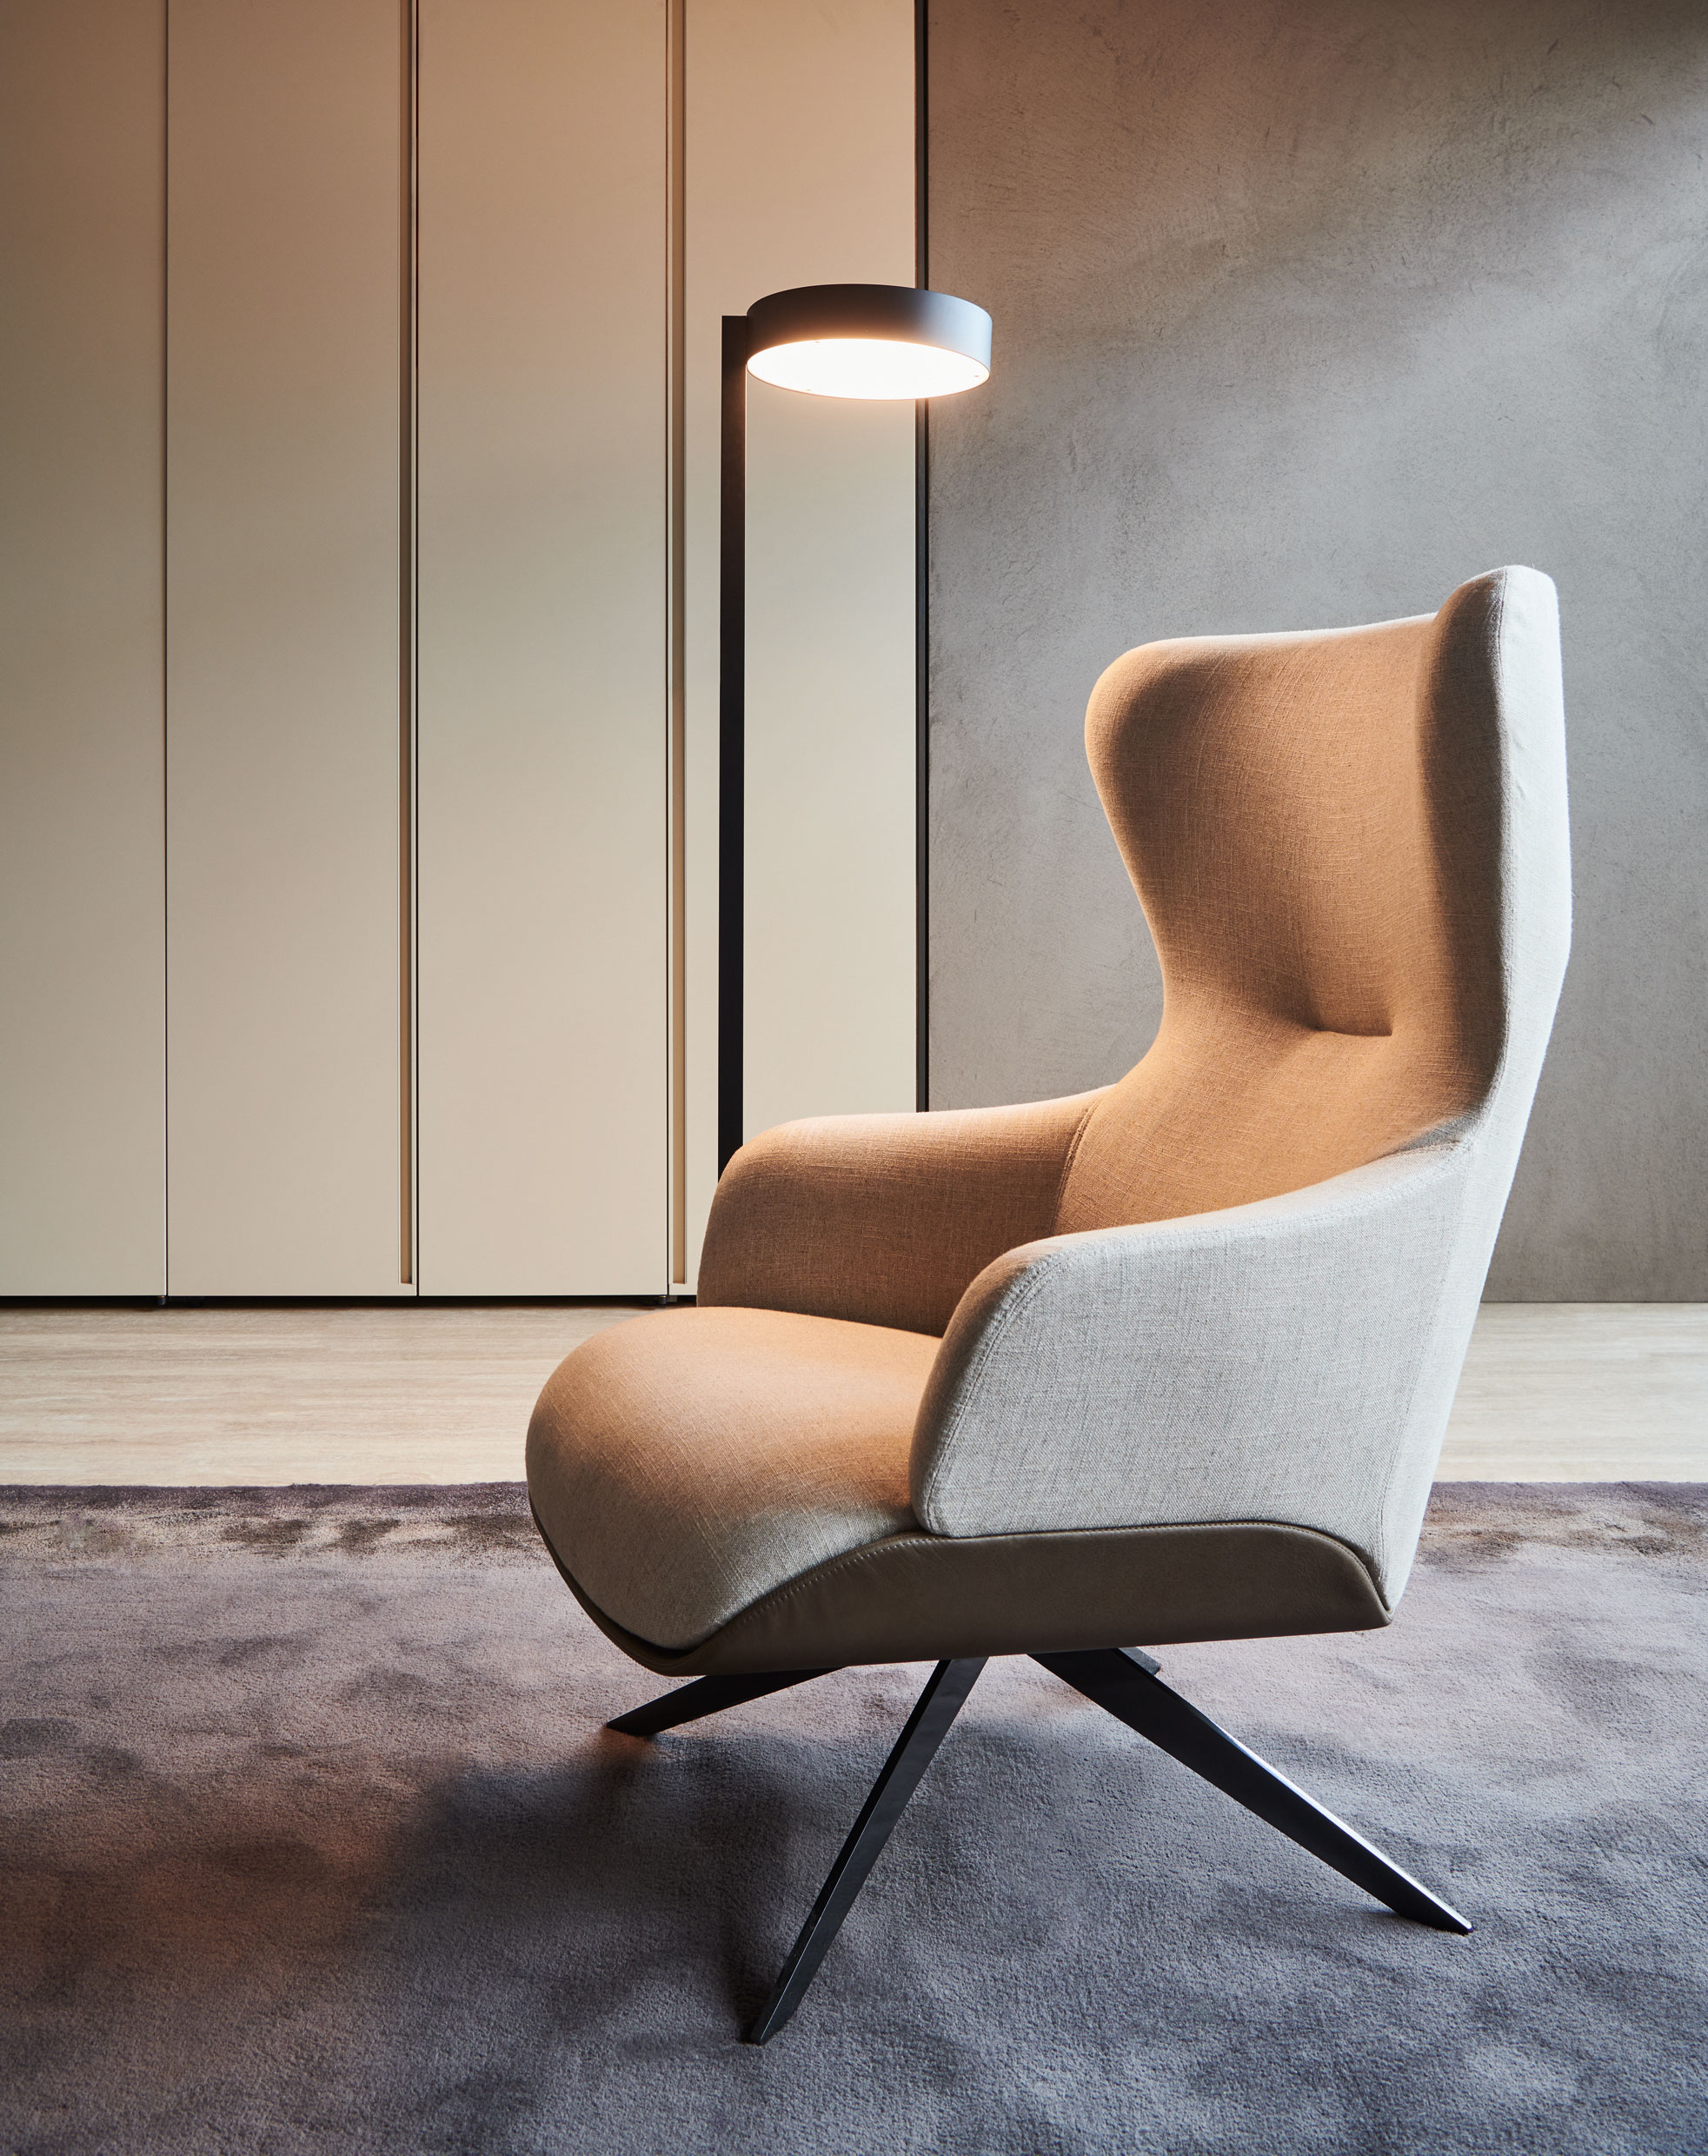 designer armchair with bergere kensington rodolfo dordoni